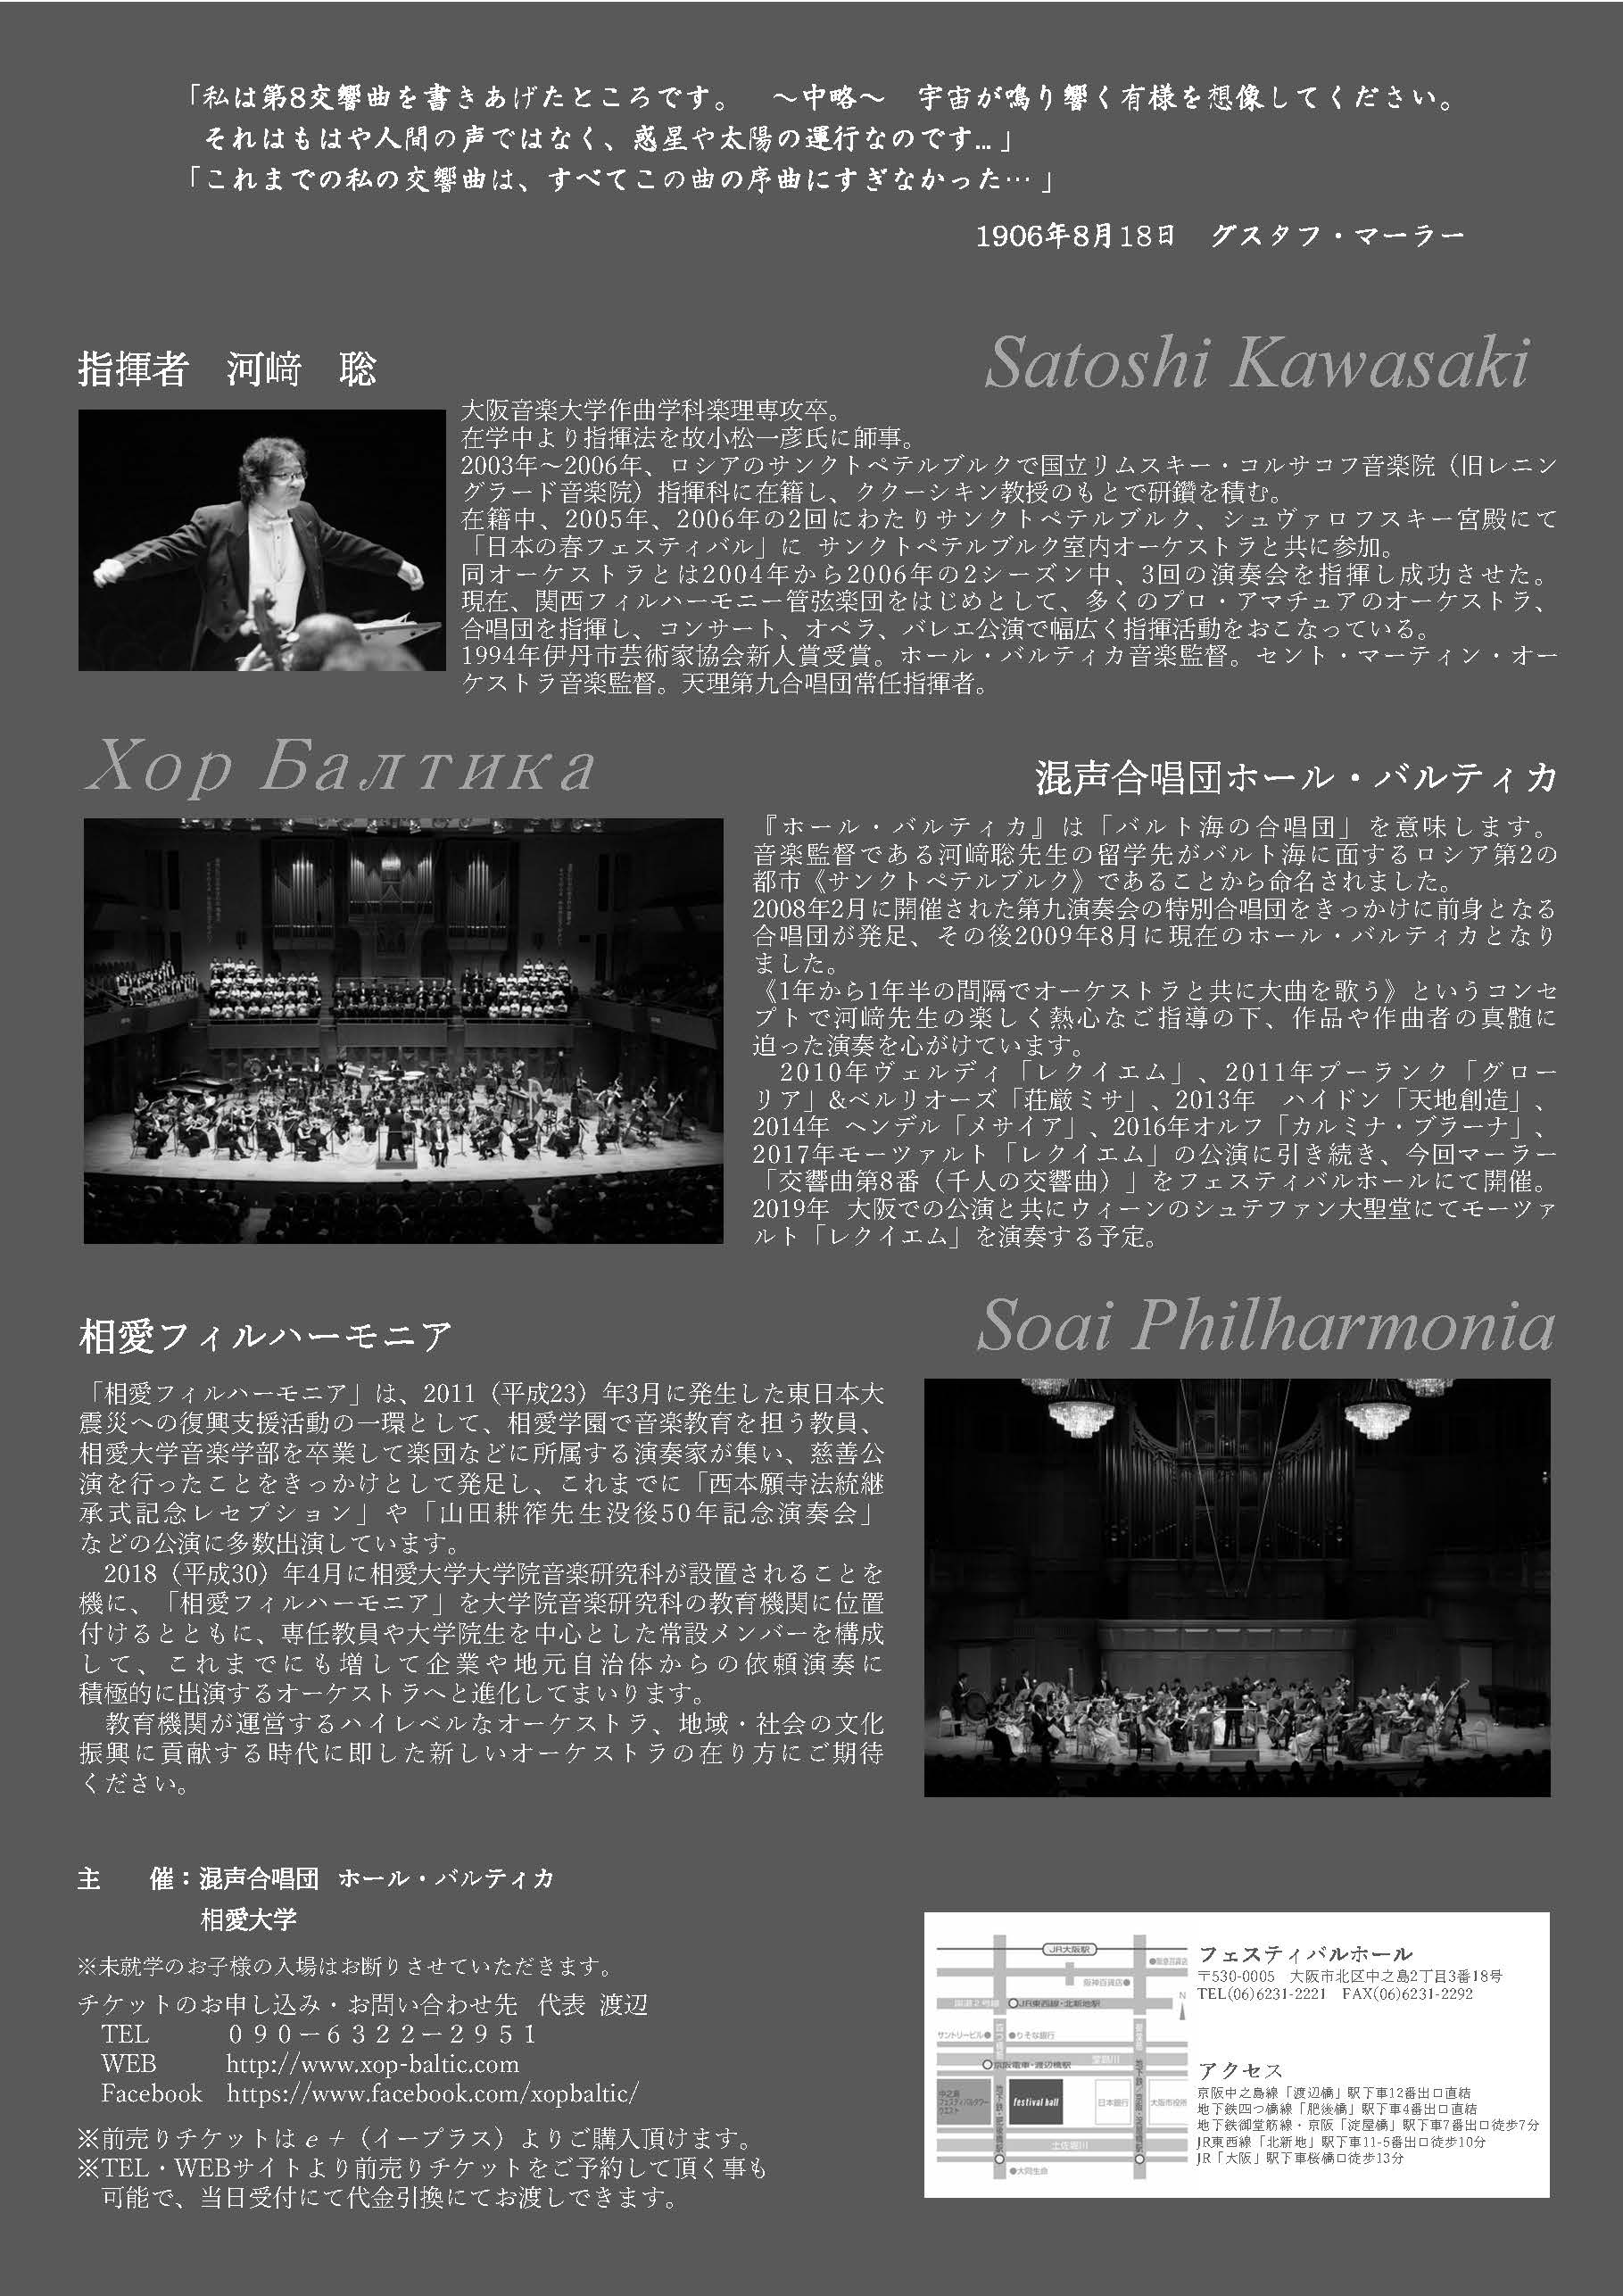 http://www.soai.ac.jp/information/concert/20180910_mahler_02.jpg